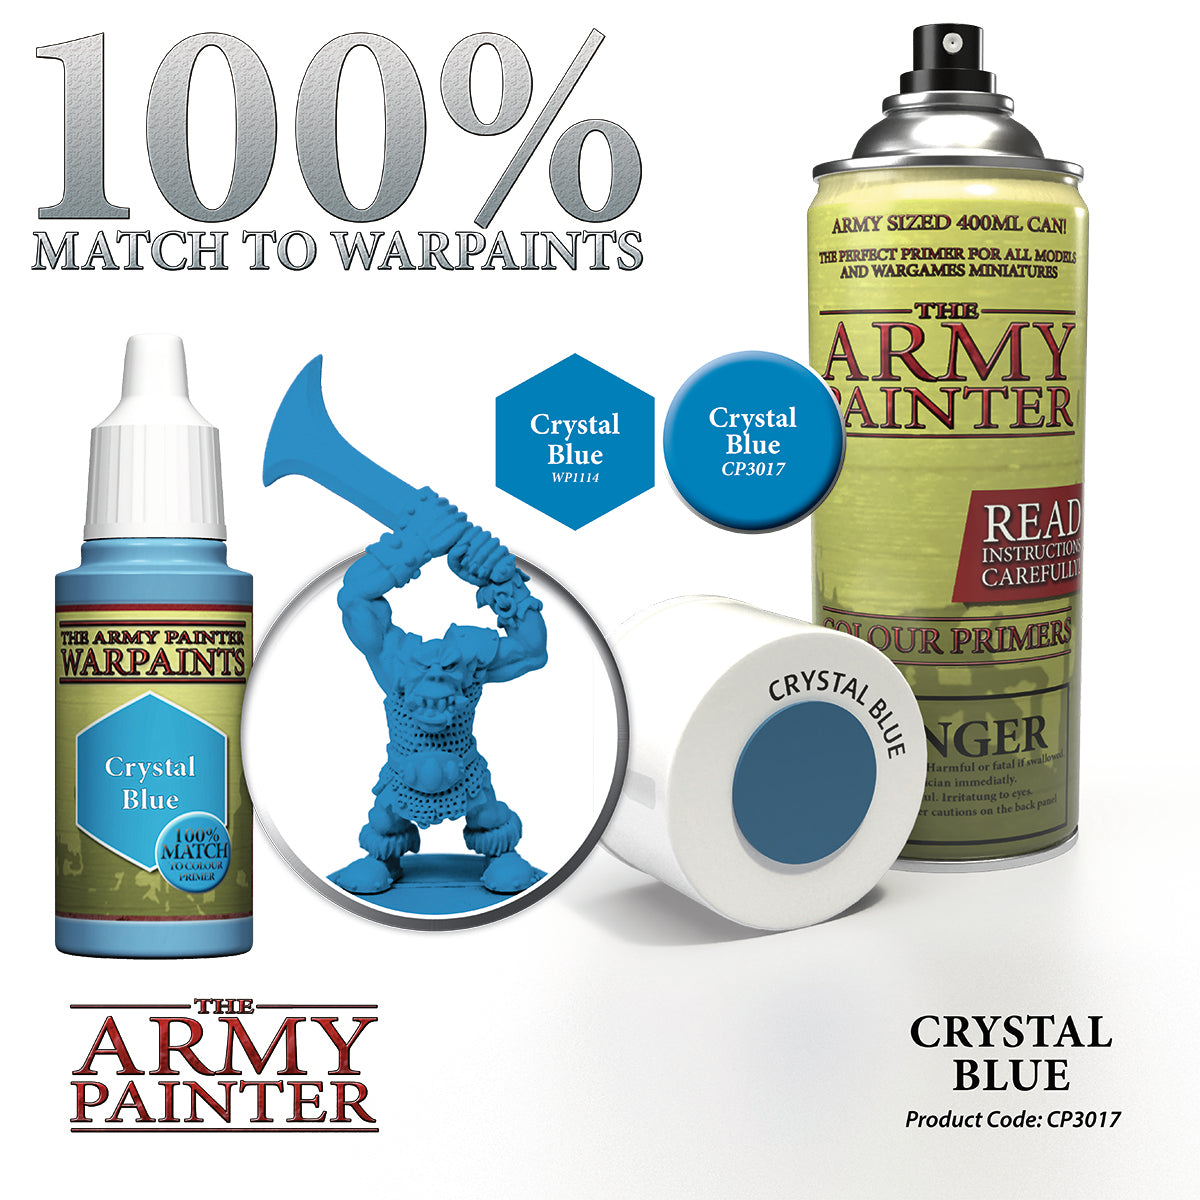 Army Painter: Crystal Blue Spray Paint Primer